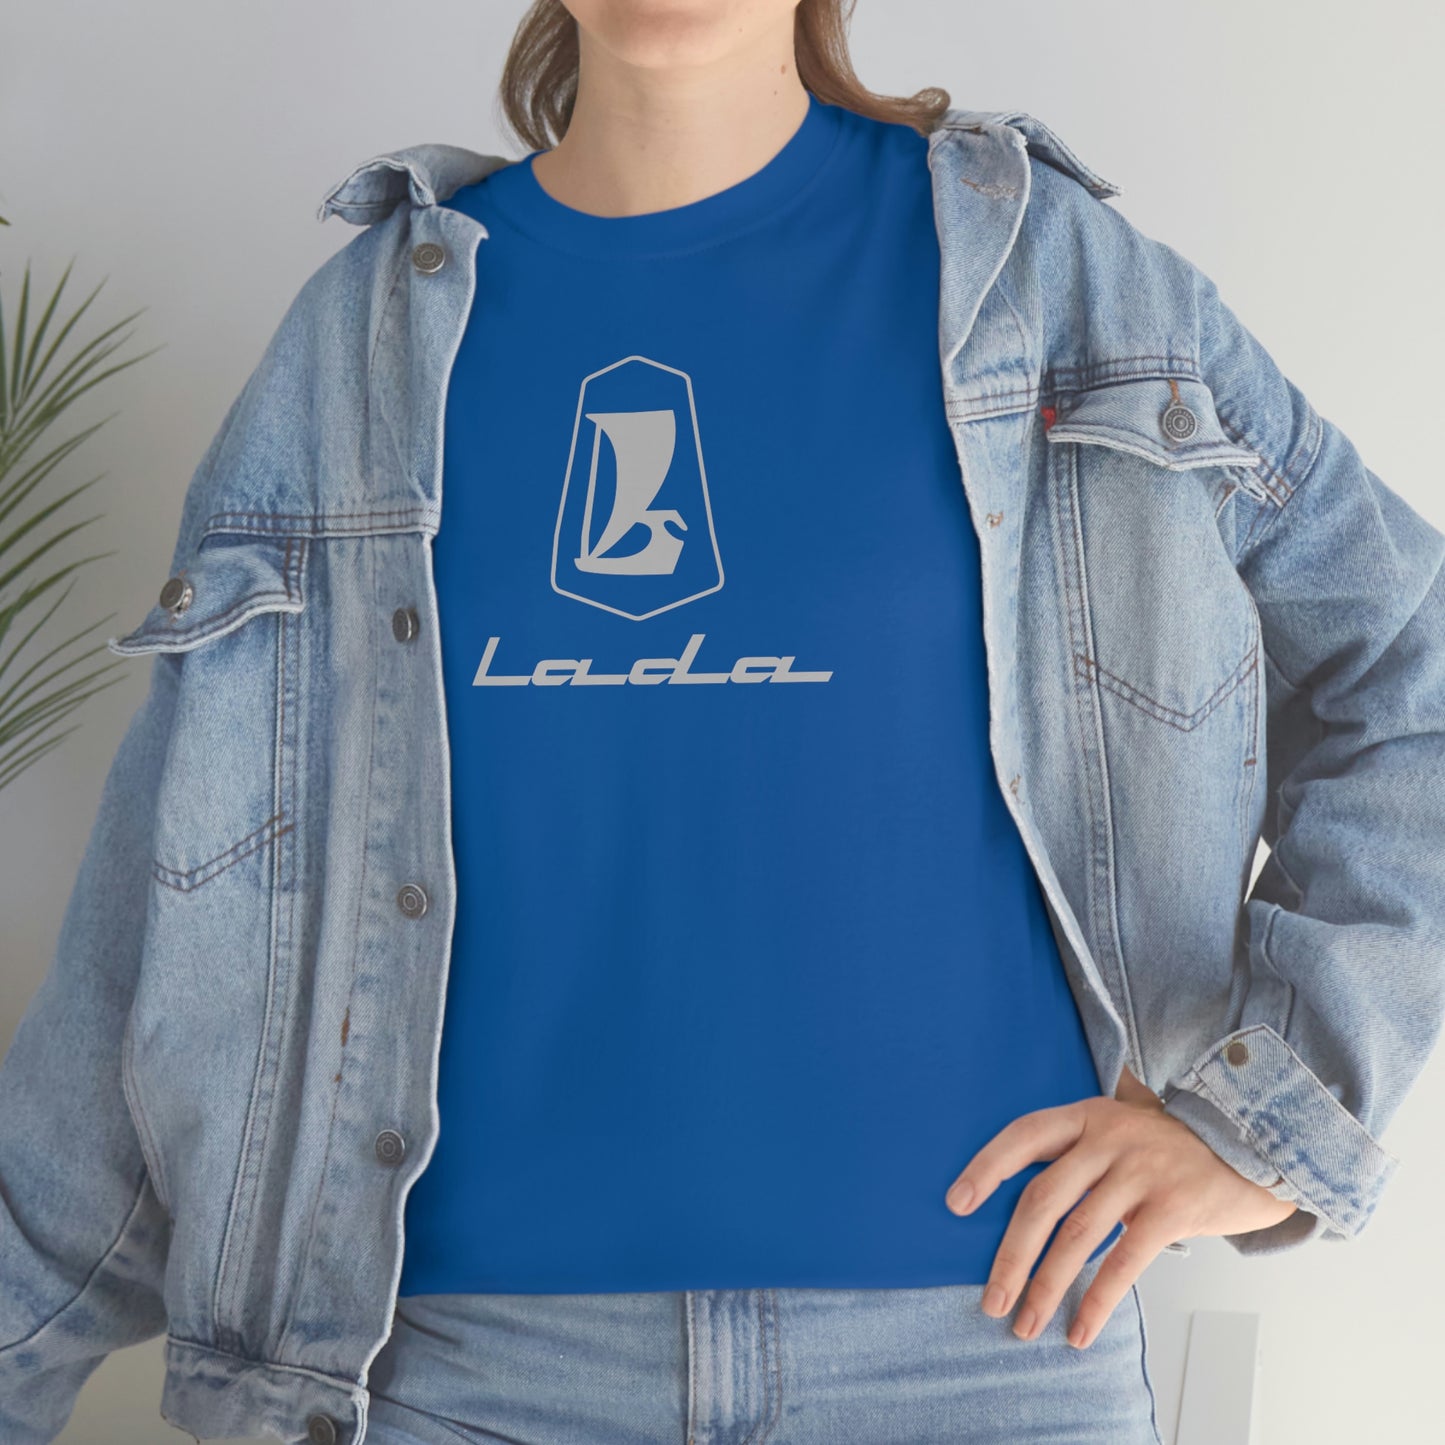 Lada T-Shirt